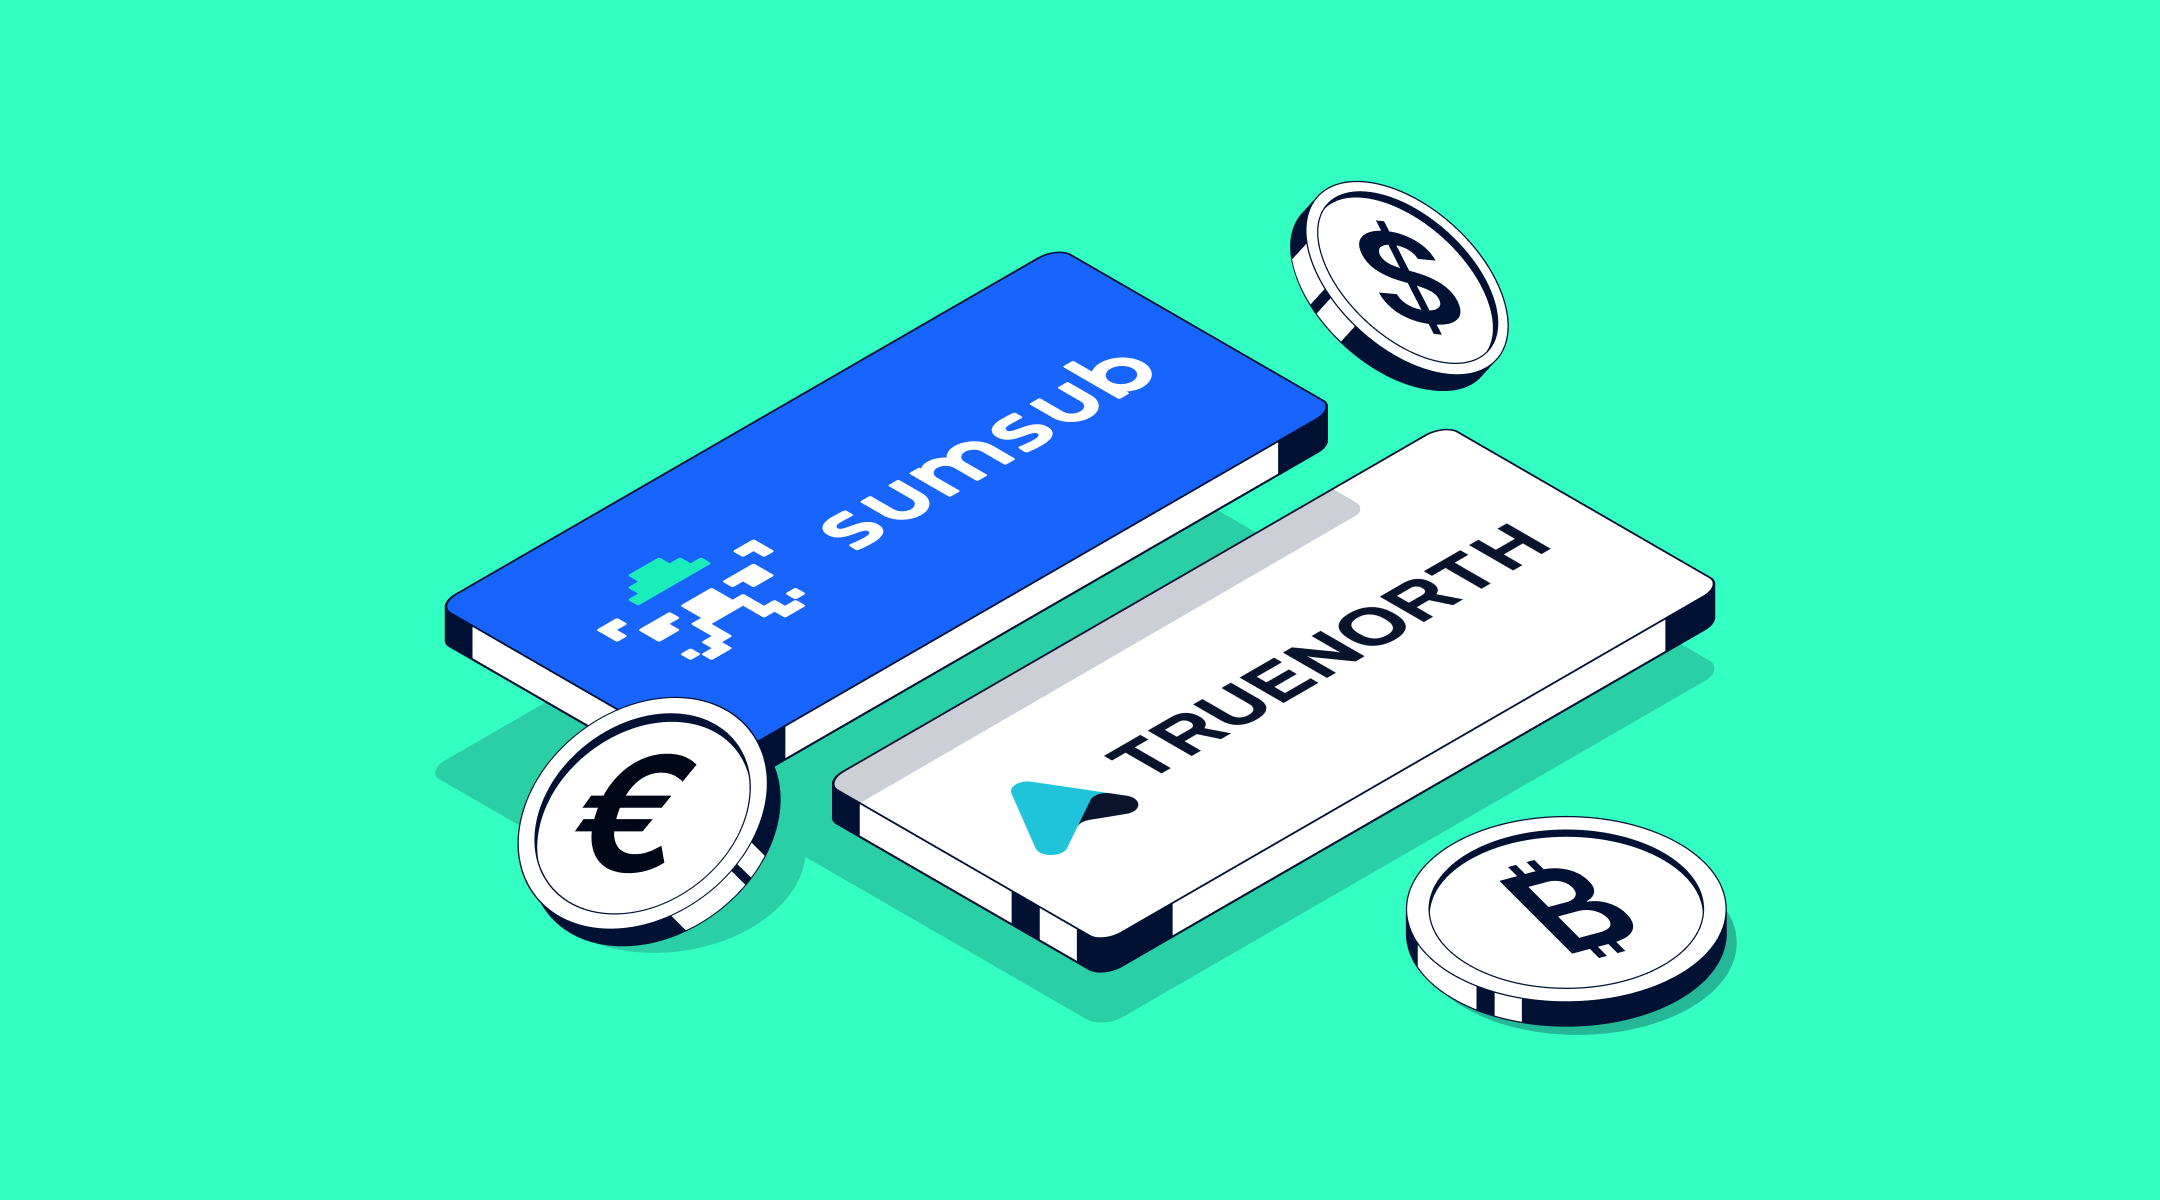 Sumsub Partnerships with TrueNorth to Digitally Transform Global Banking